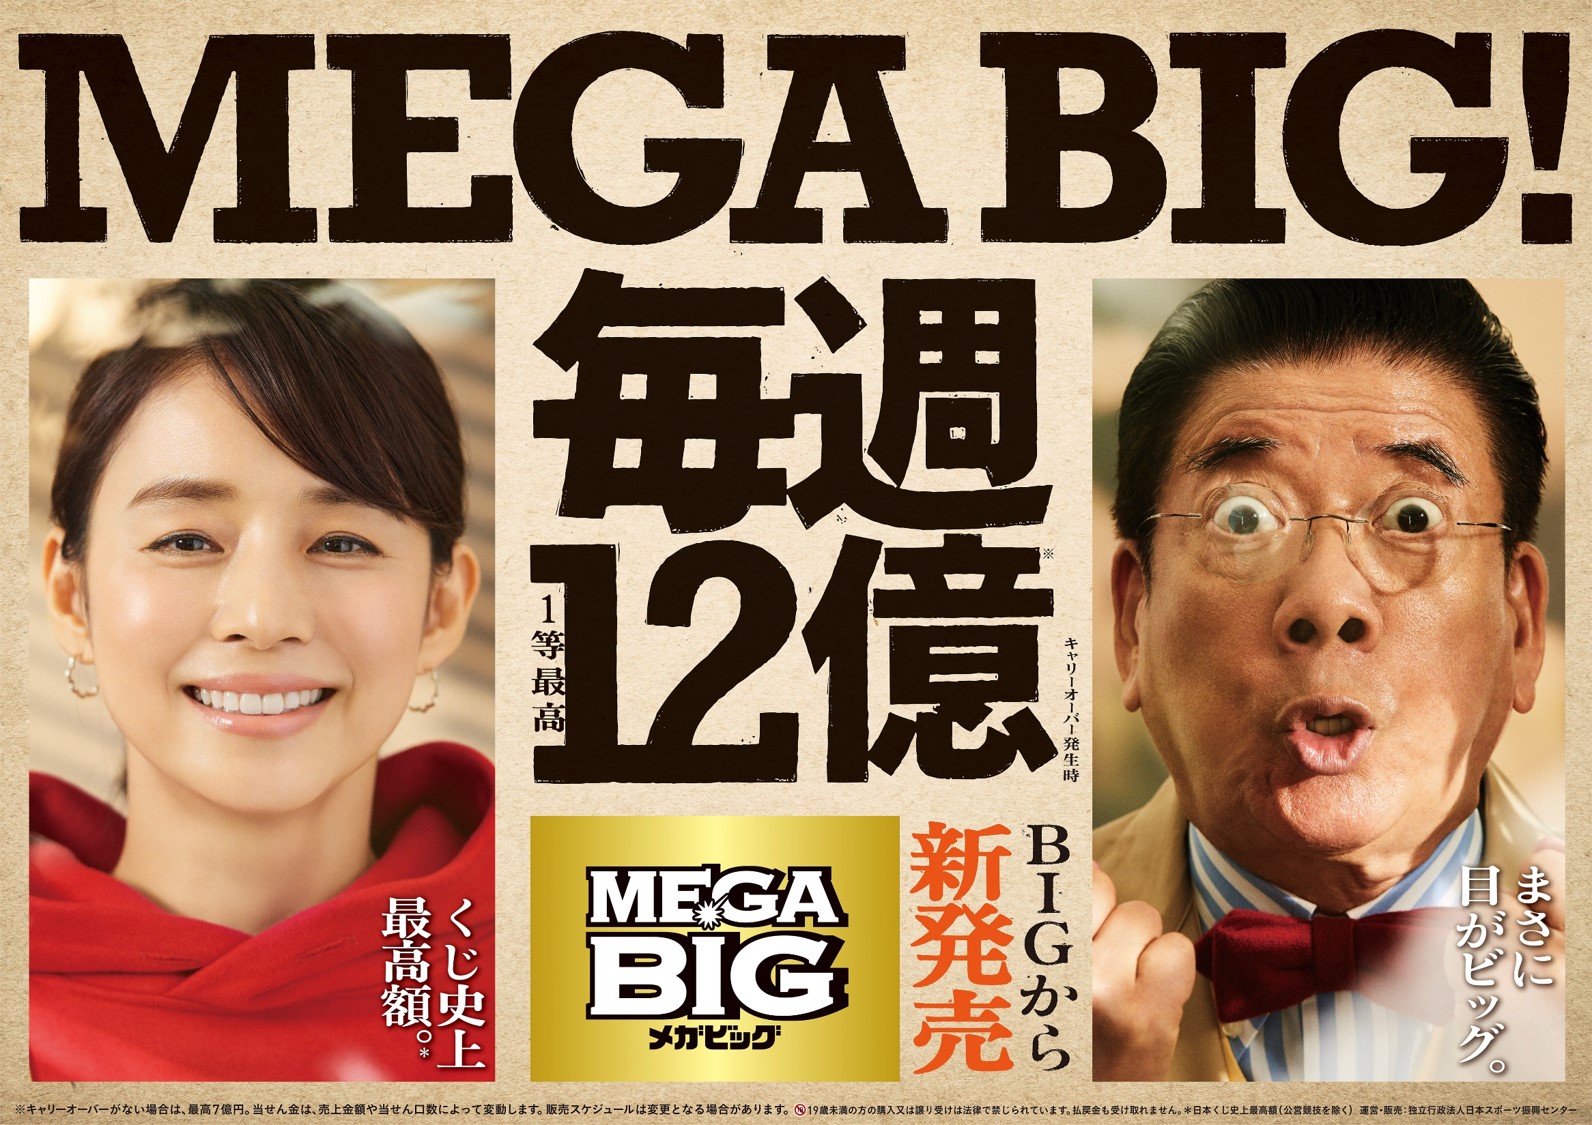 Big メガ 12億円「MEGA BIG」、大分県のローソンでまさかの2回連続当せん者